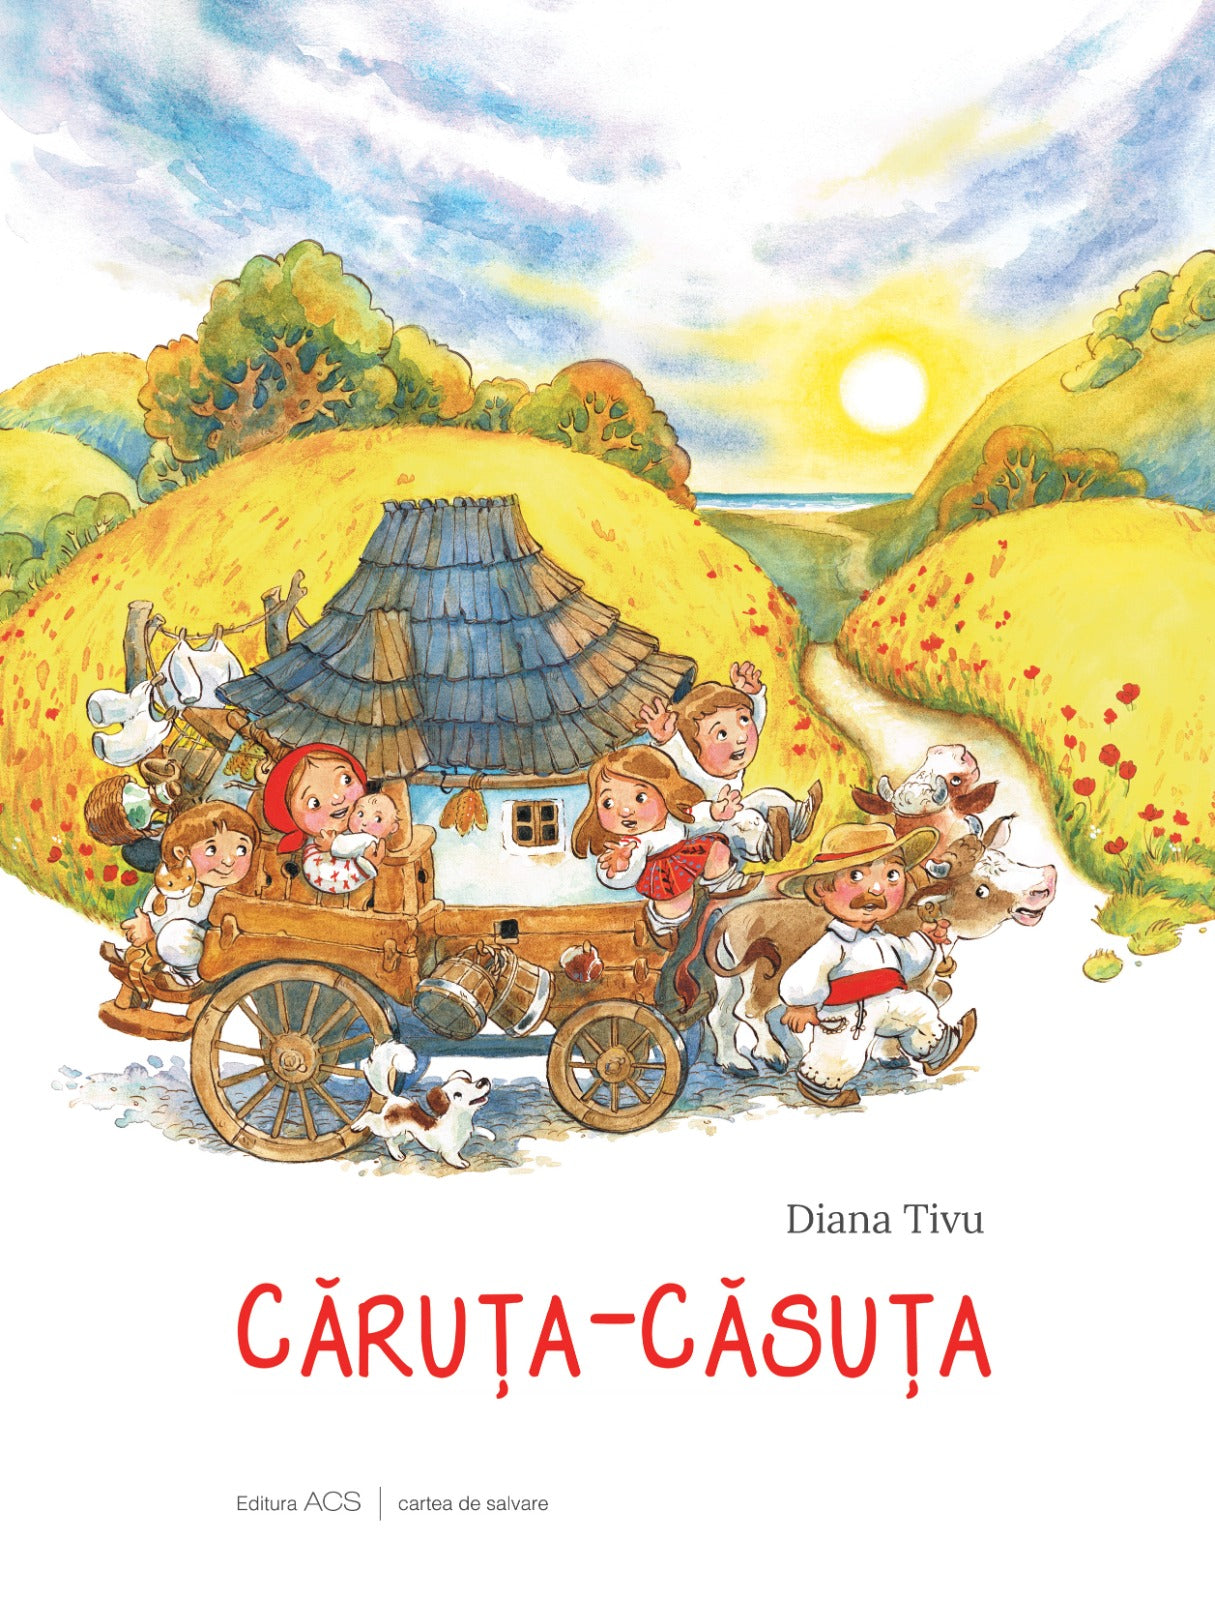 Diana Tivu Caruta - Casuta